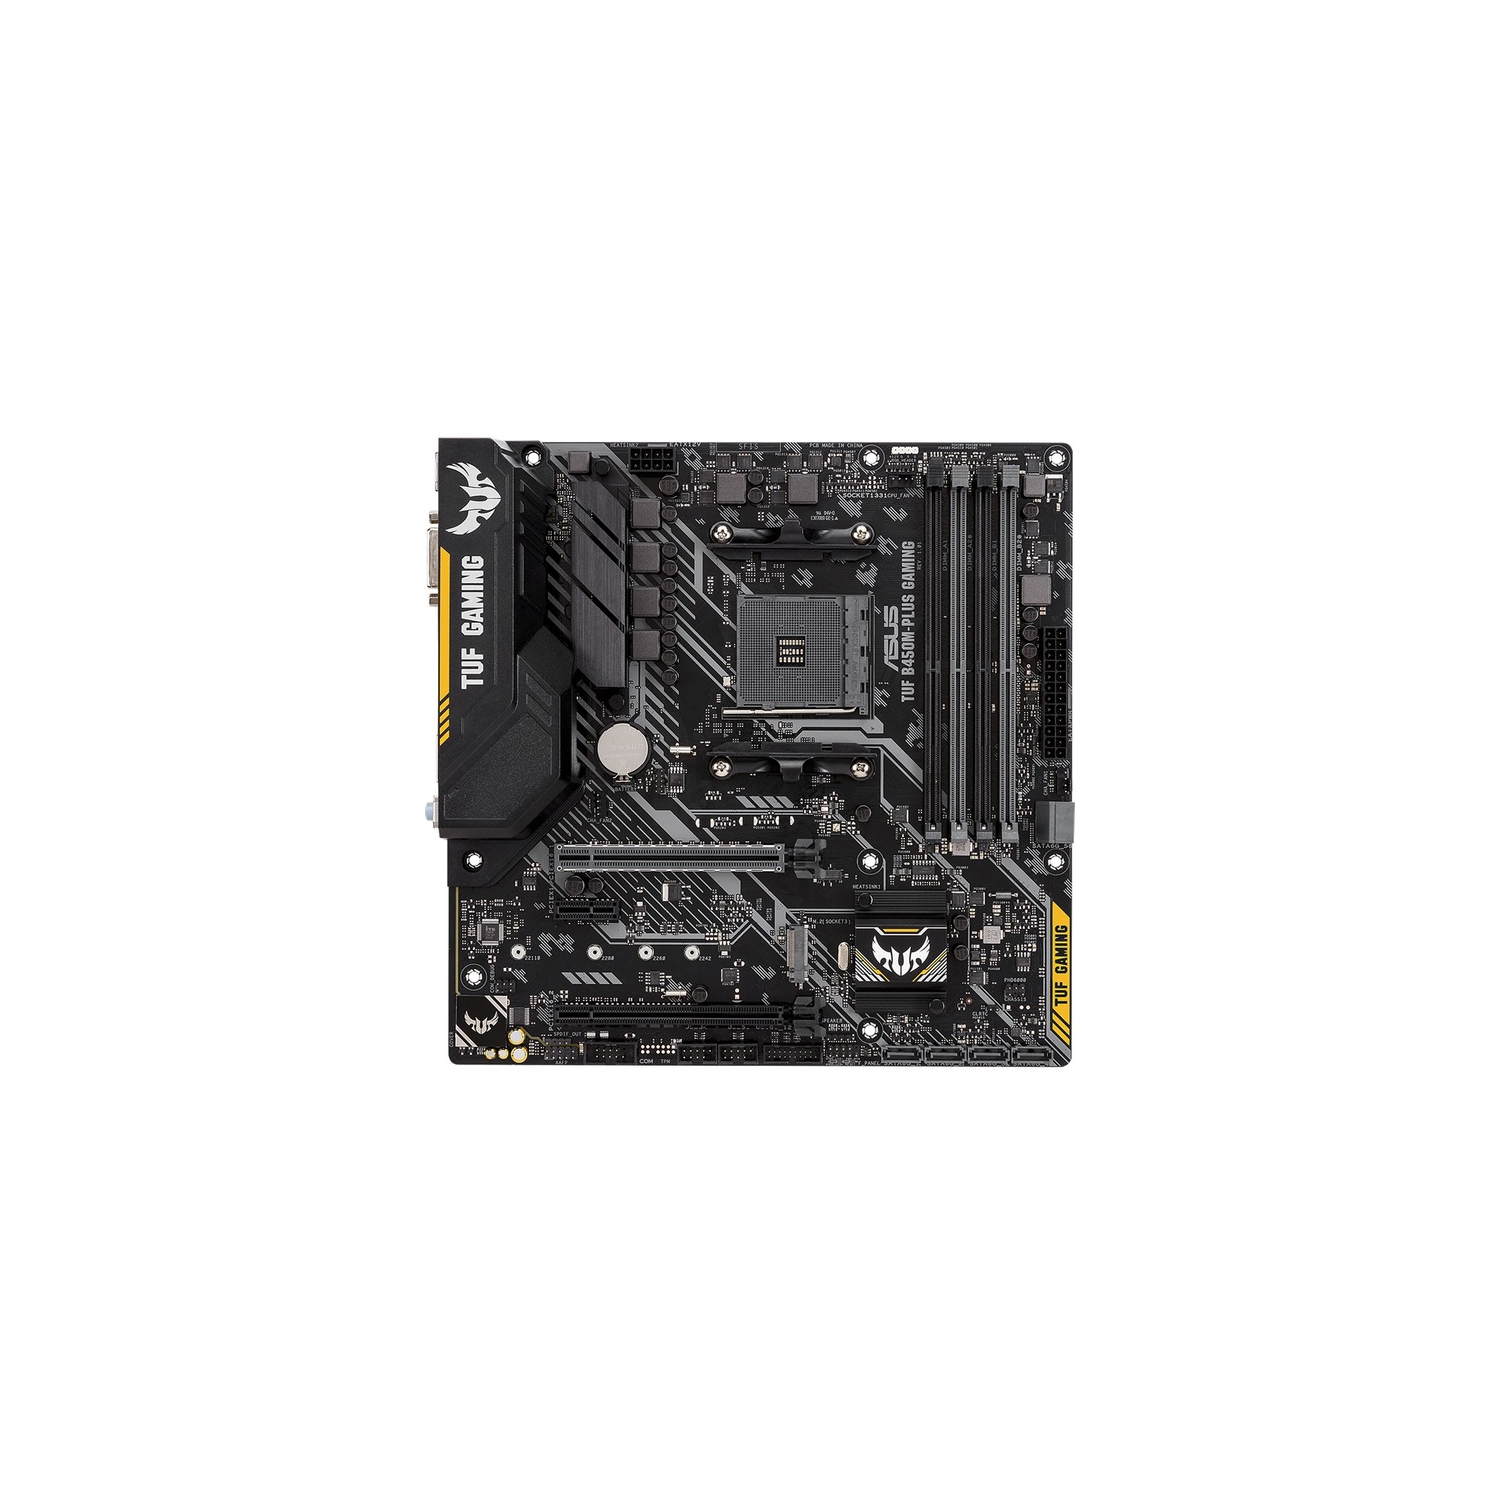 ASUS Motherboard TUF B450M-PLUS GAMING AMD AM4 B450 Max.64GB DDR4 Windows10 Micro ATX Retail